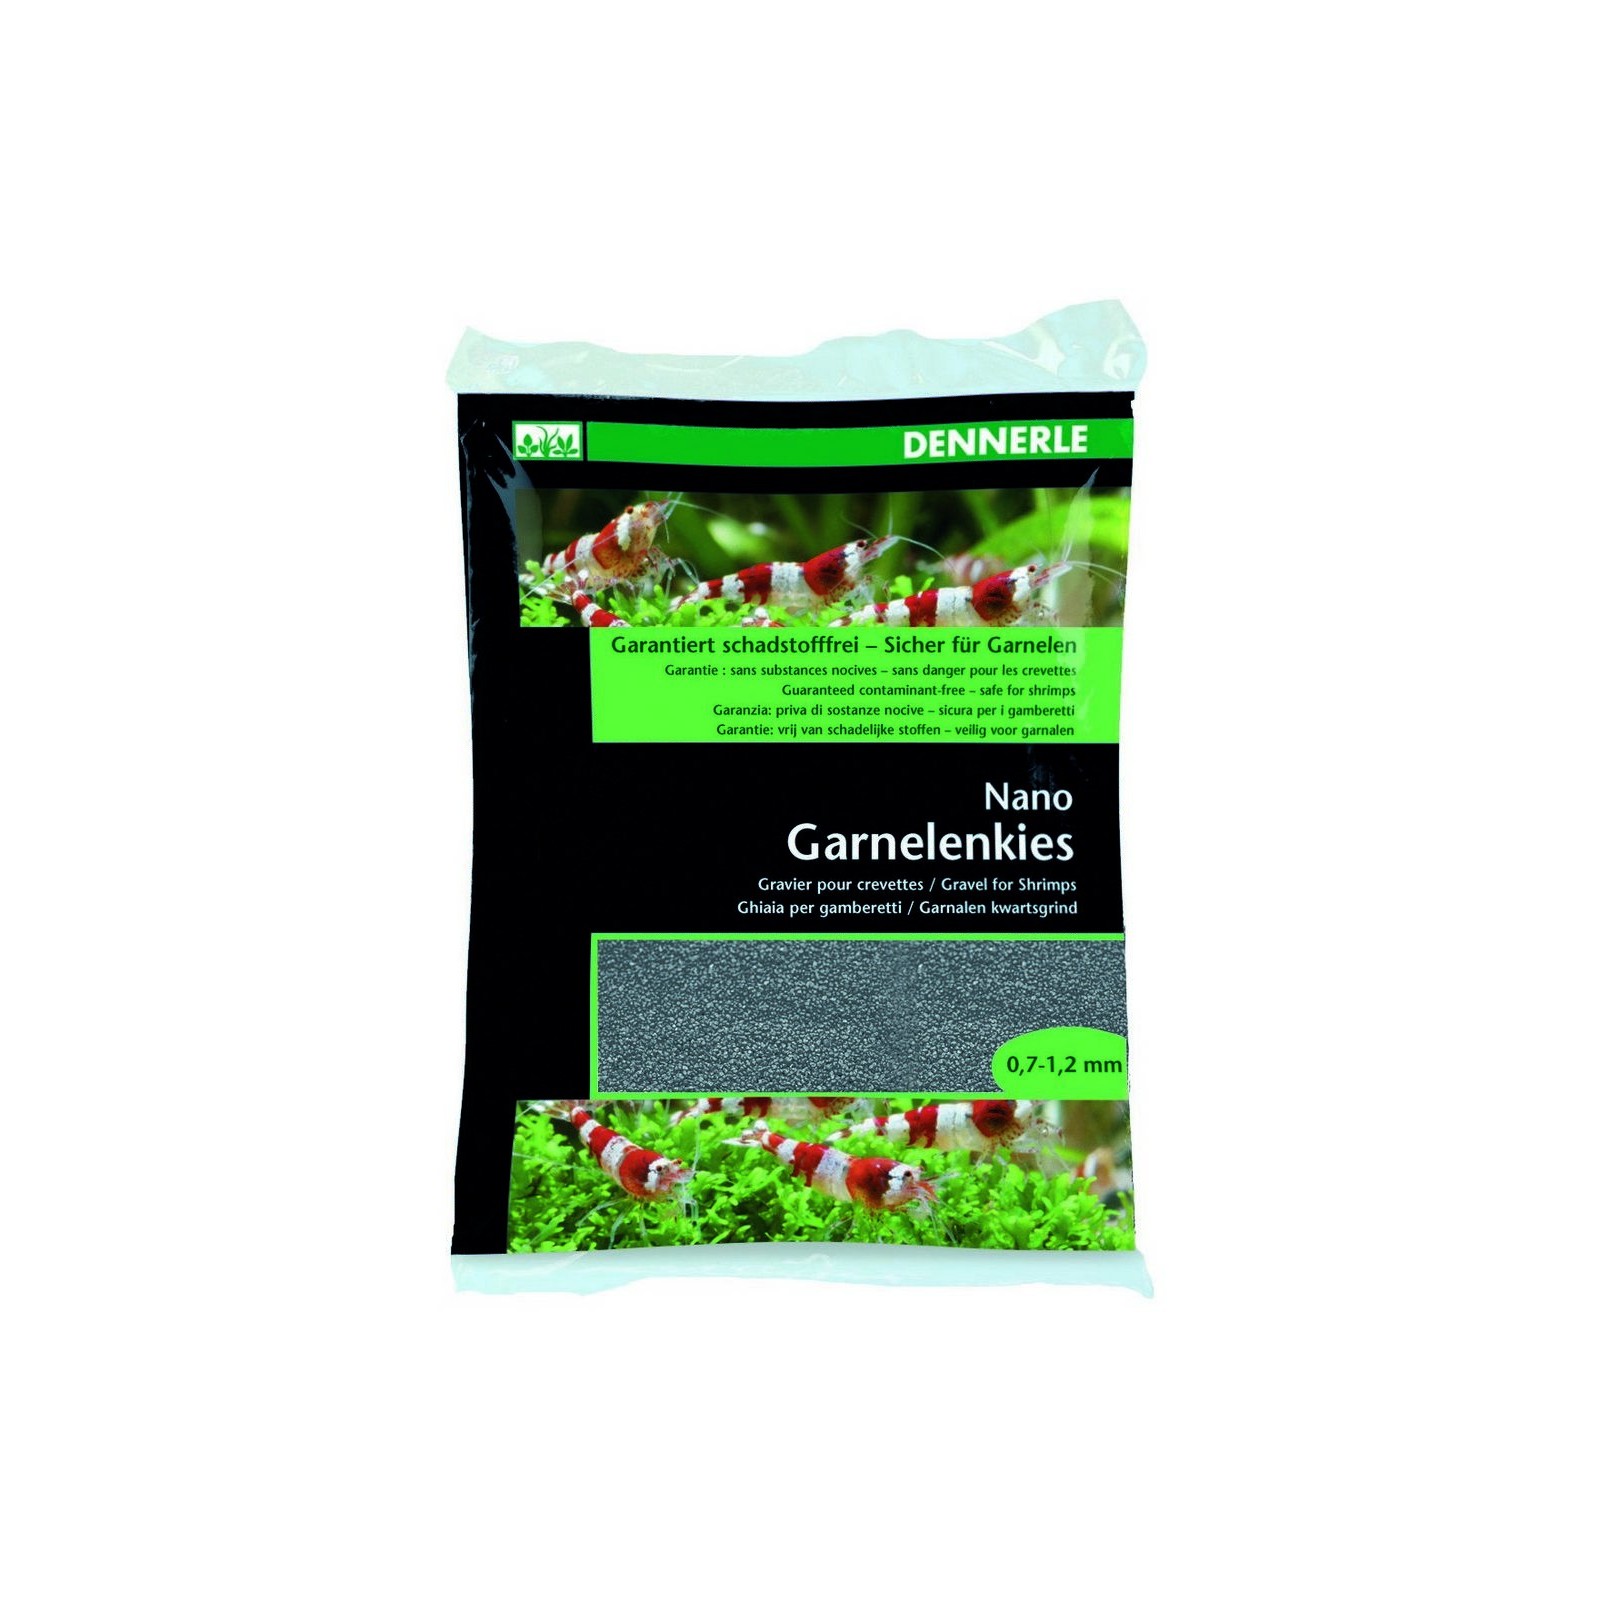 Dennerle 5857 Nano Garnelemkies Arkansas Grigia Ghiaia per gamberetti d'acquario 2 kg